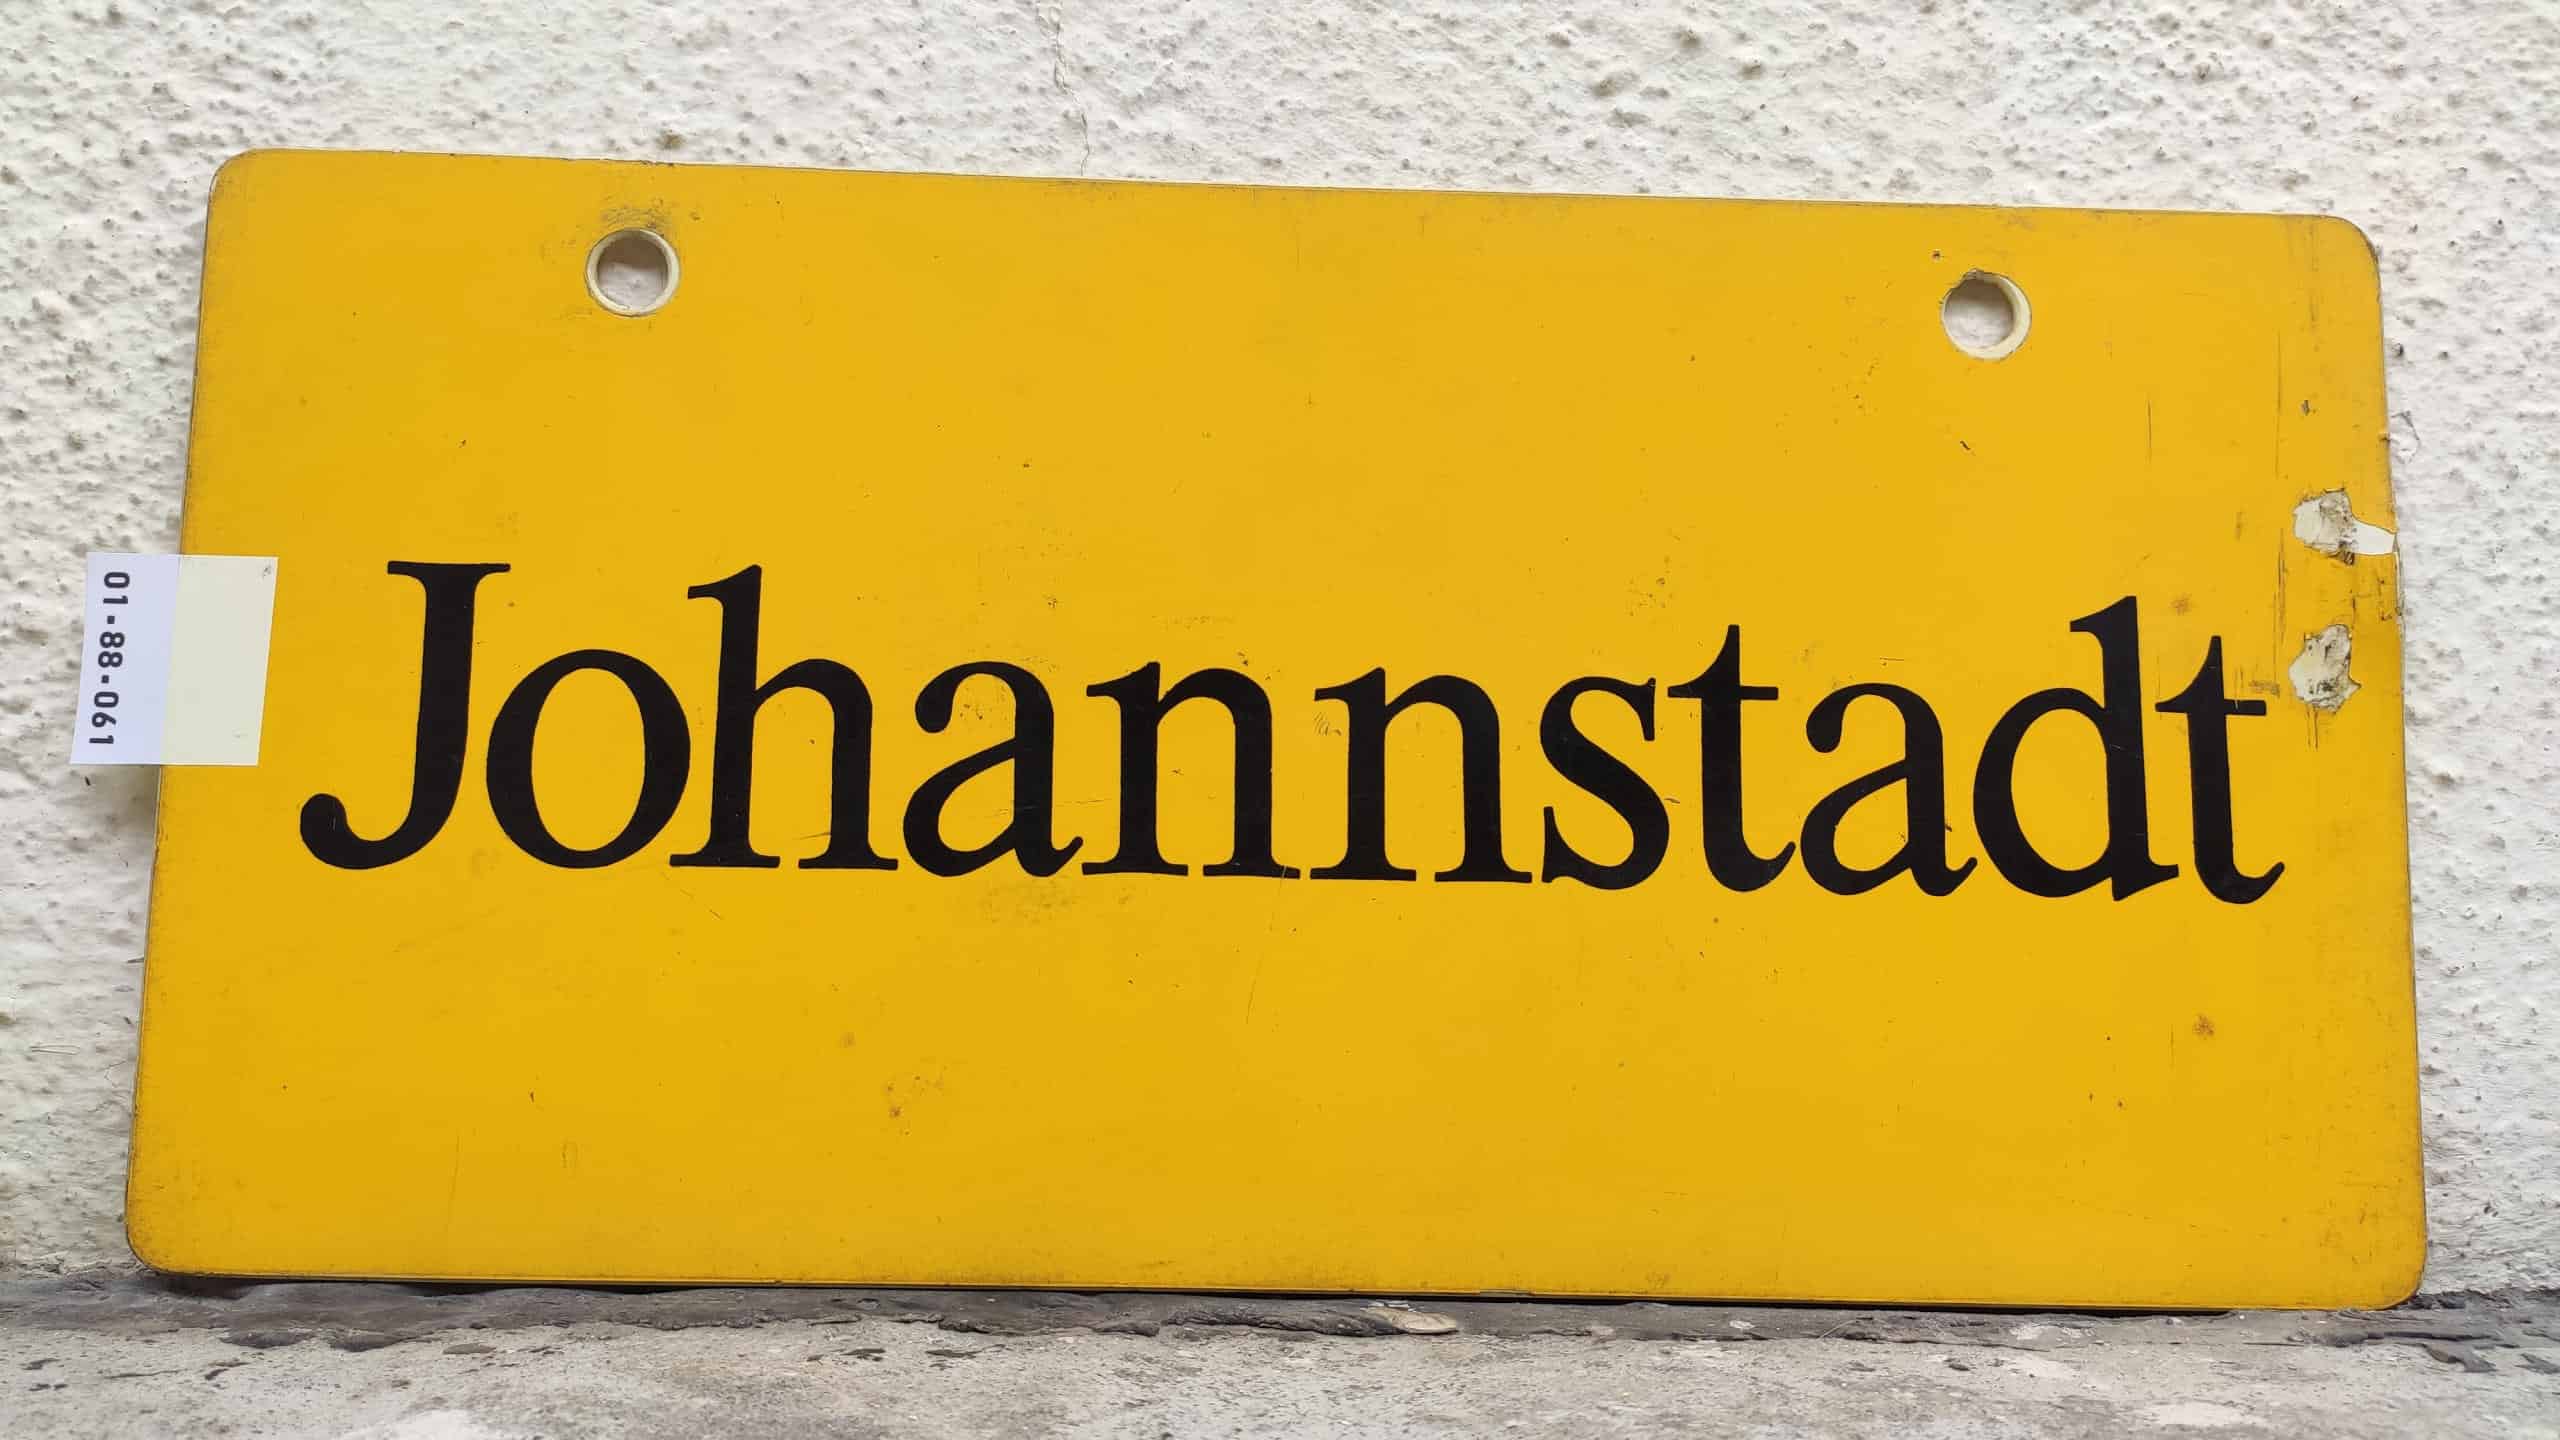 Johannstadt